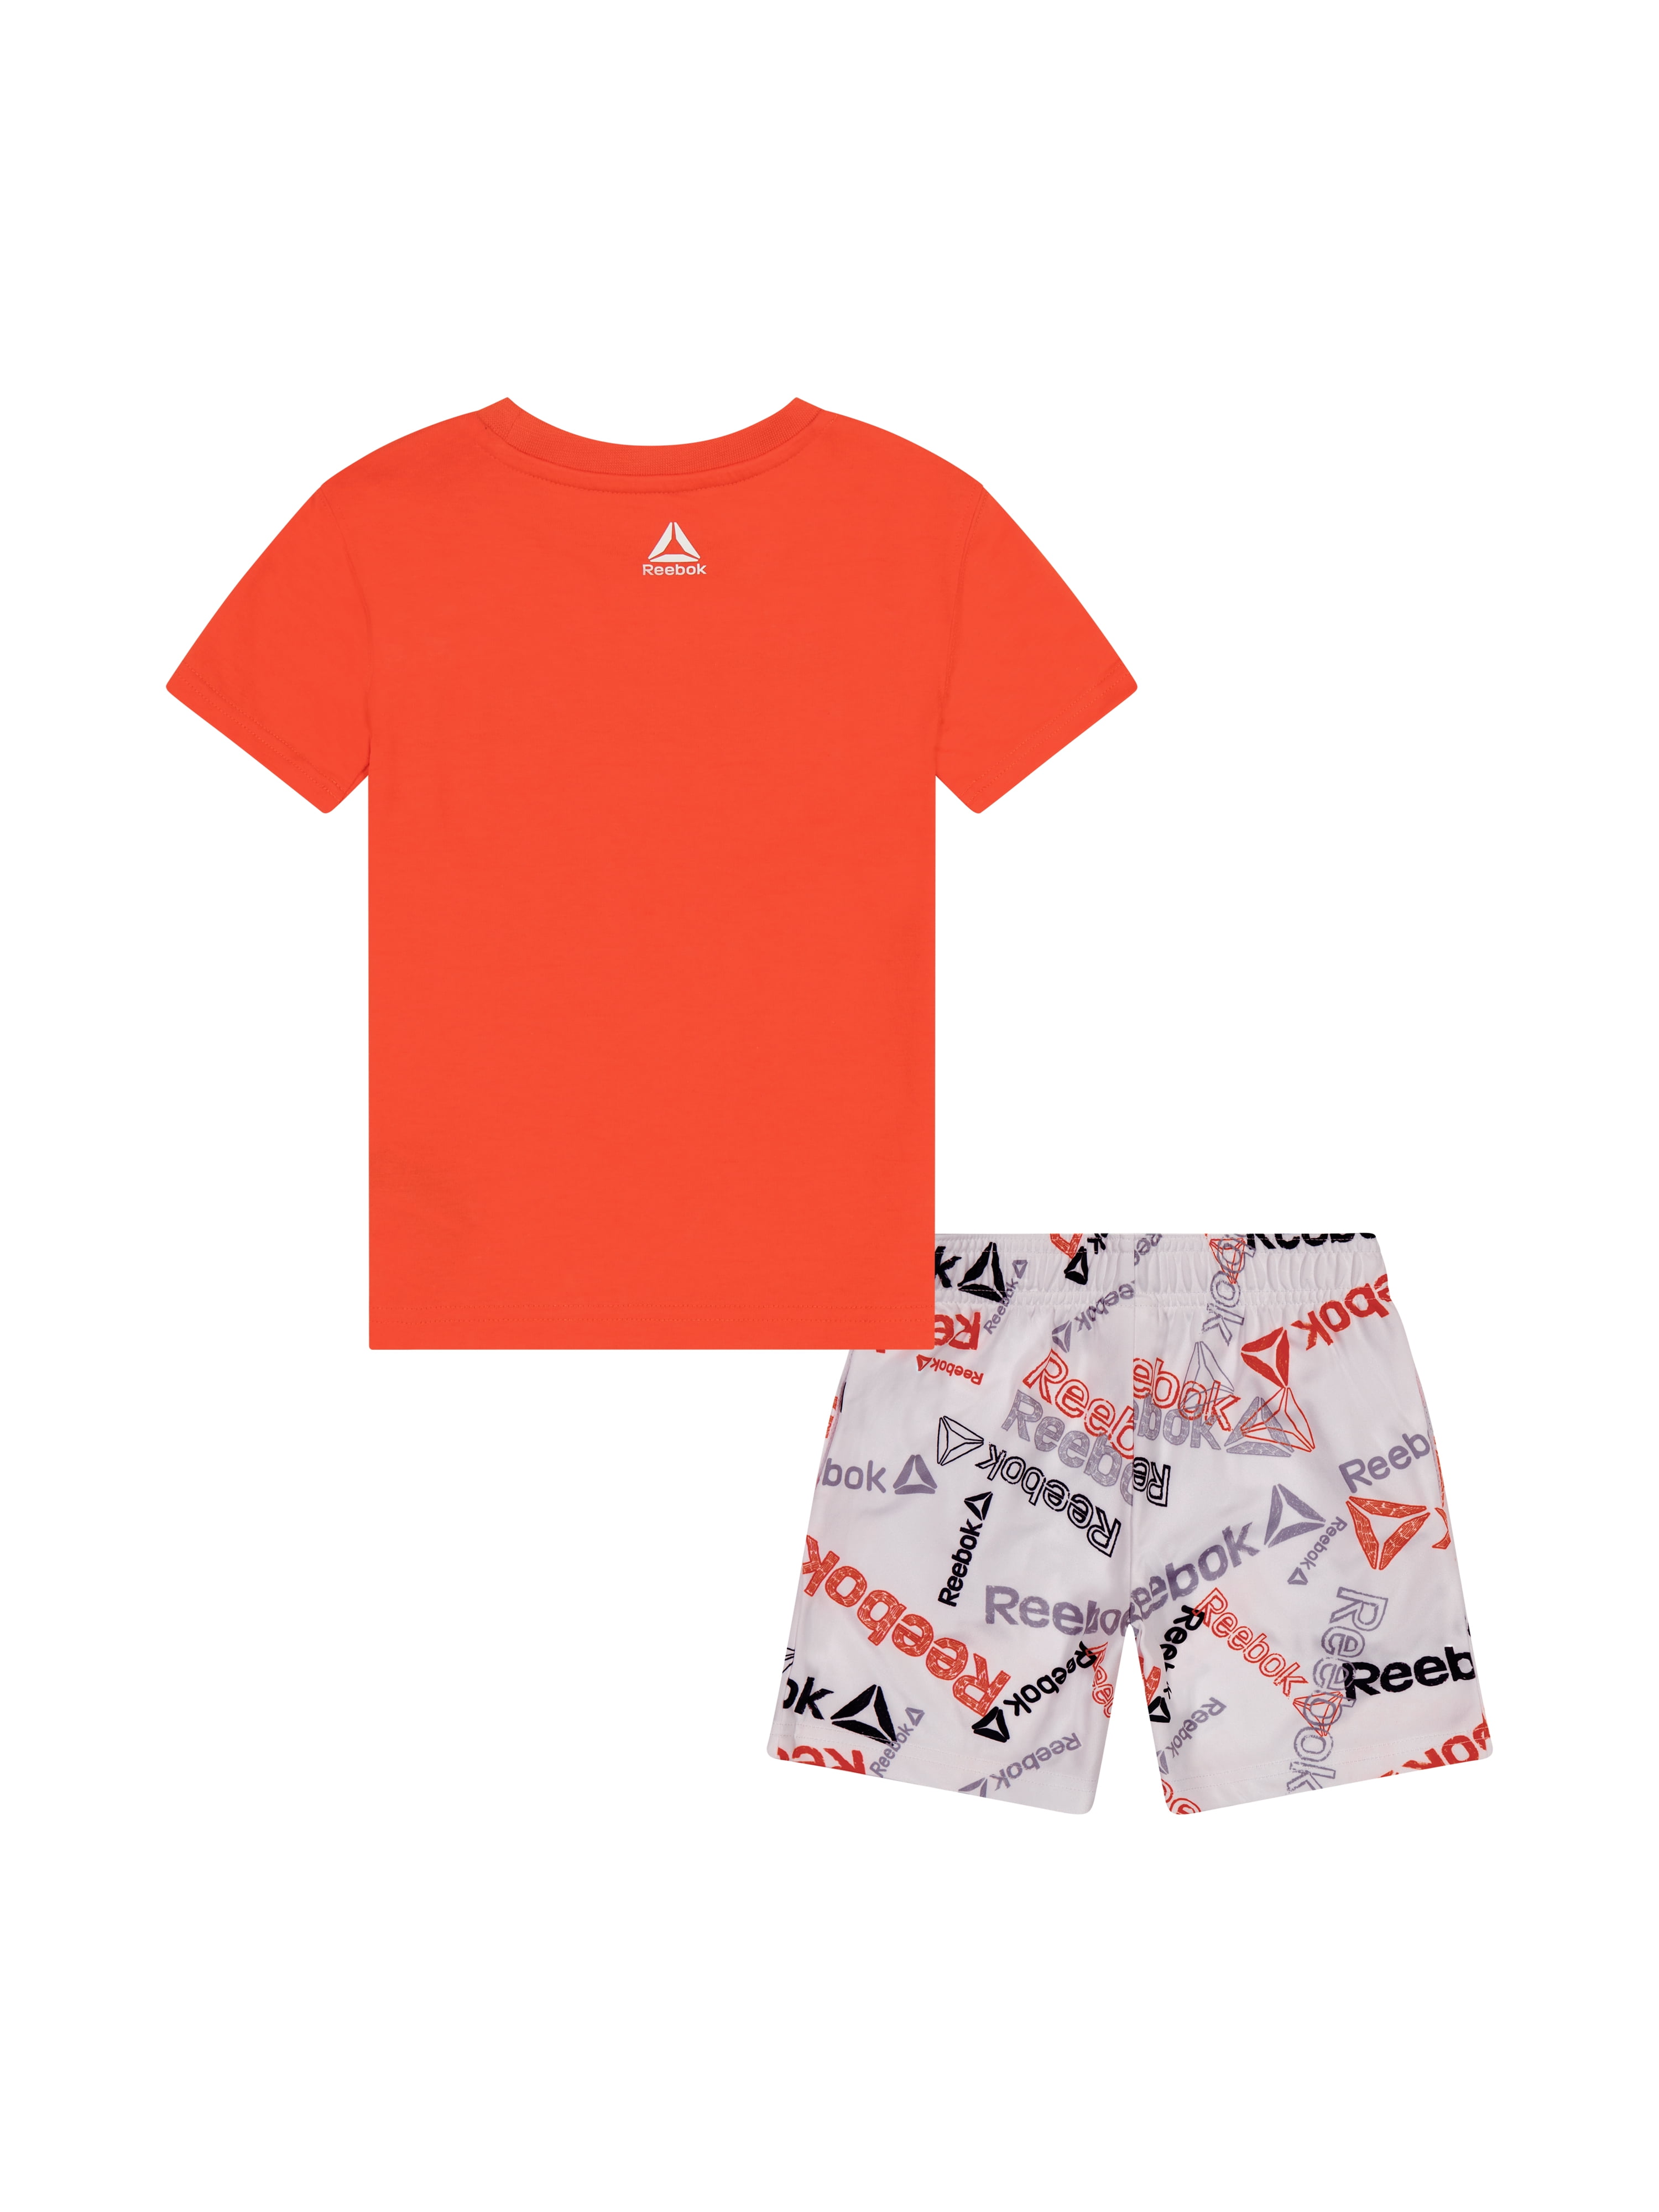 Reebok Toddler Boys T-Shirt and Short, Outfit Set - Walmart.com